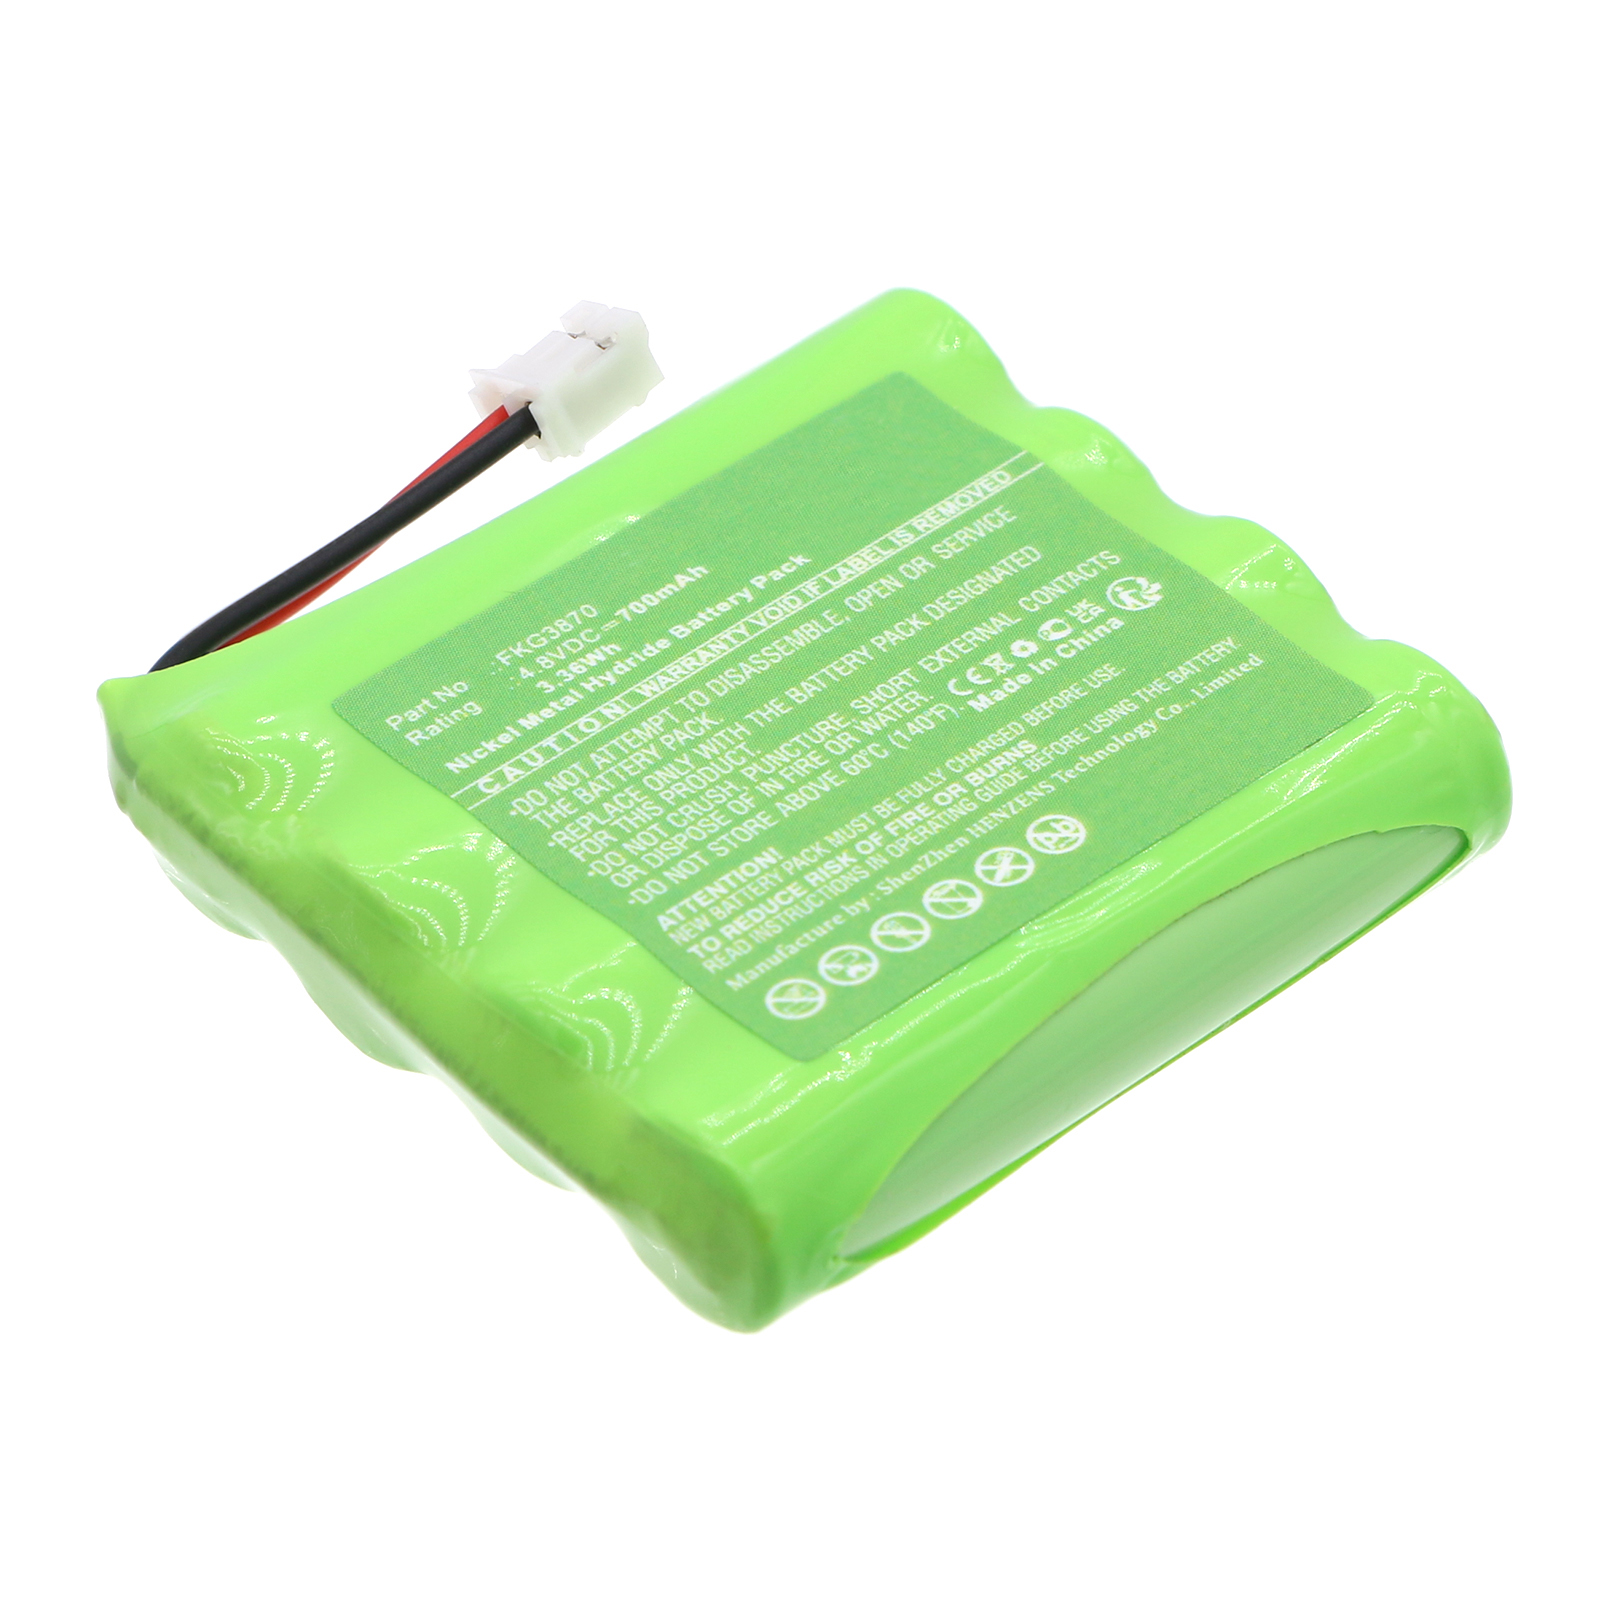 Synergy Digital Medical Battery, Compatible with Globus FKG3870 Medical Battery (Ni-MH, 4.8V, 700mAh)